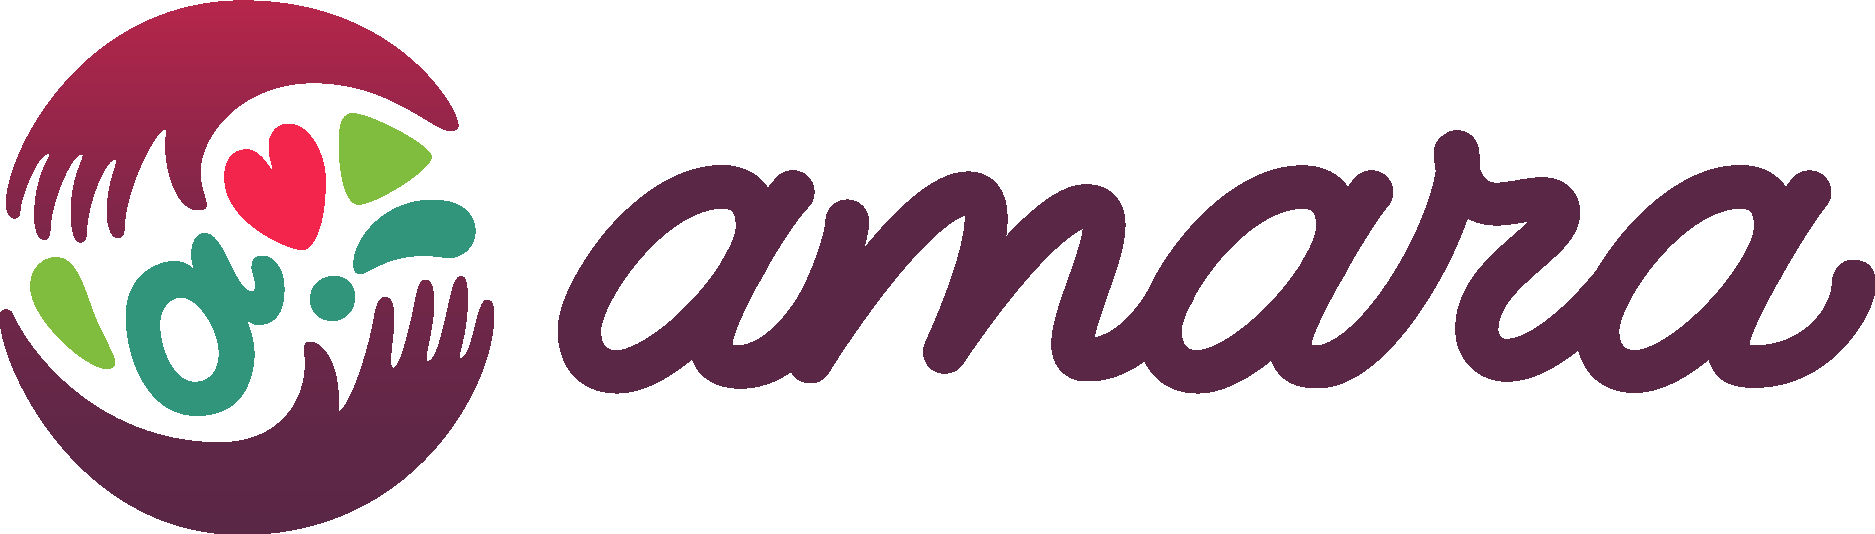 Amara Video Editing Logo Vector